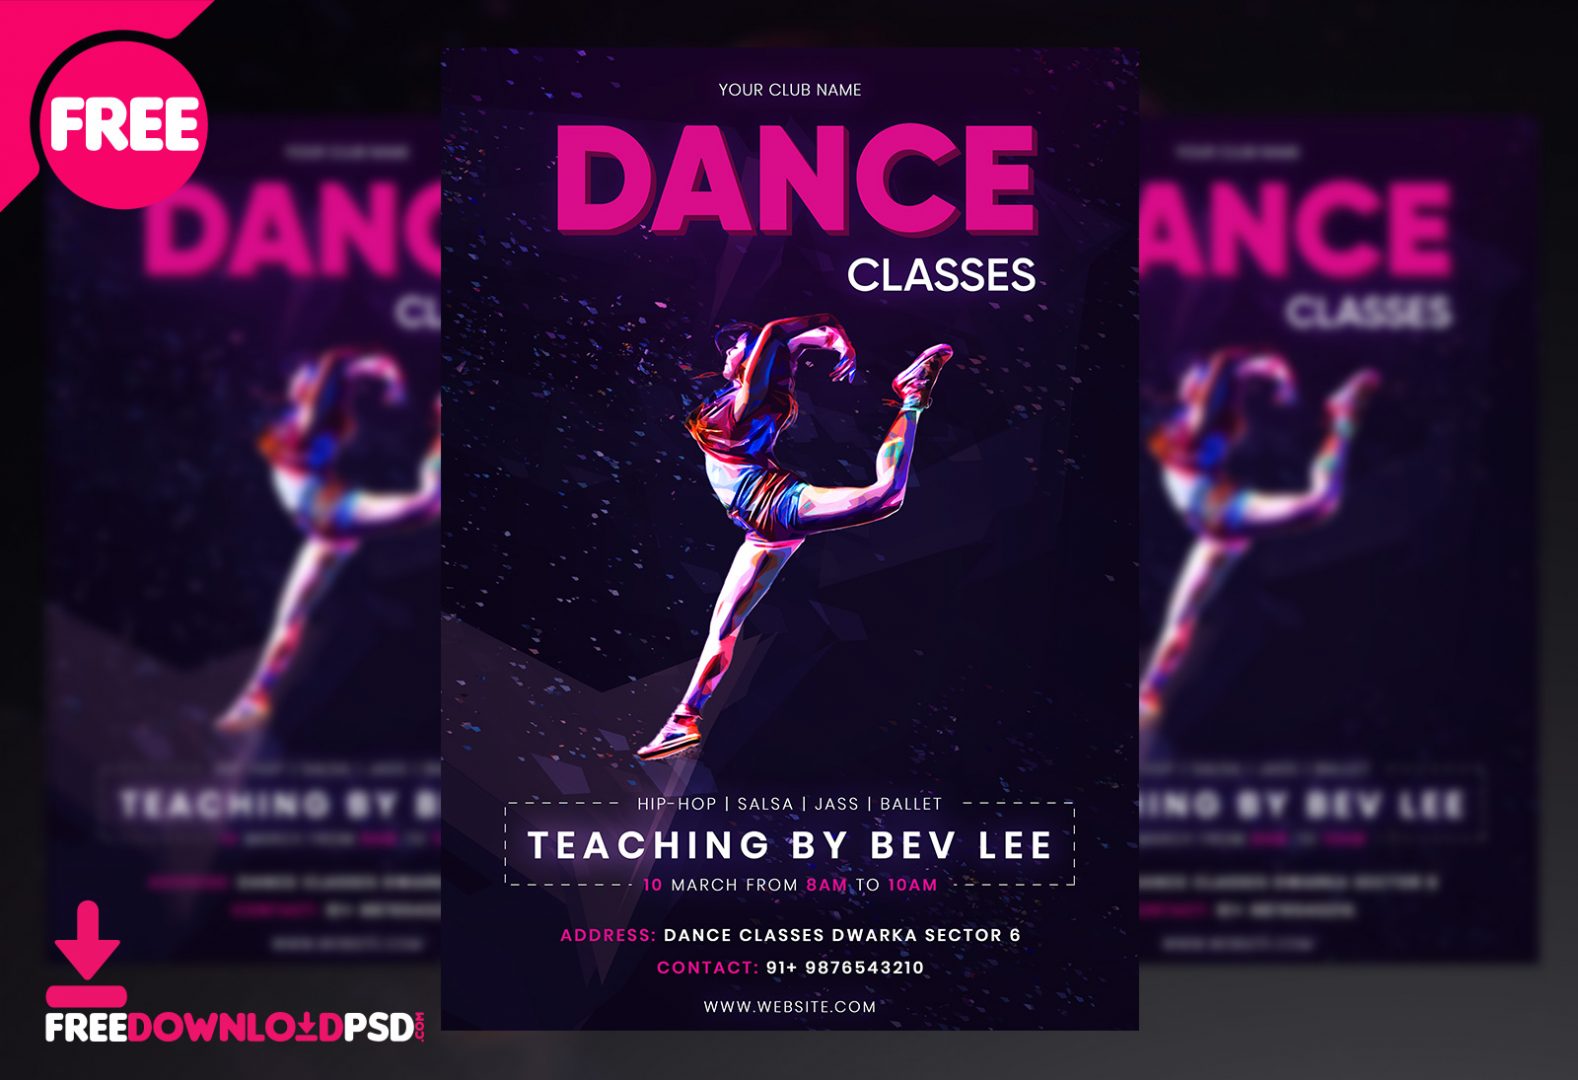 Dance Classes Flyer PSD Template